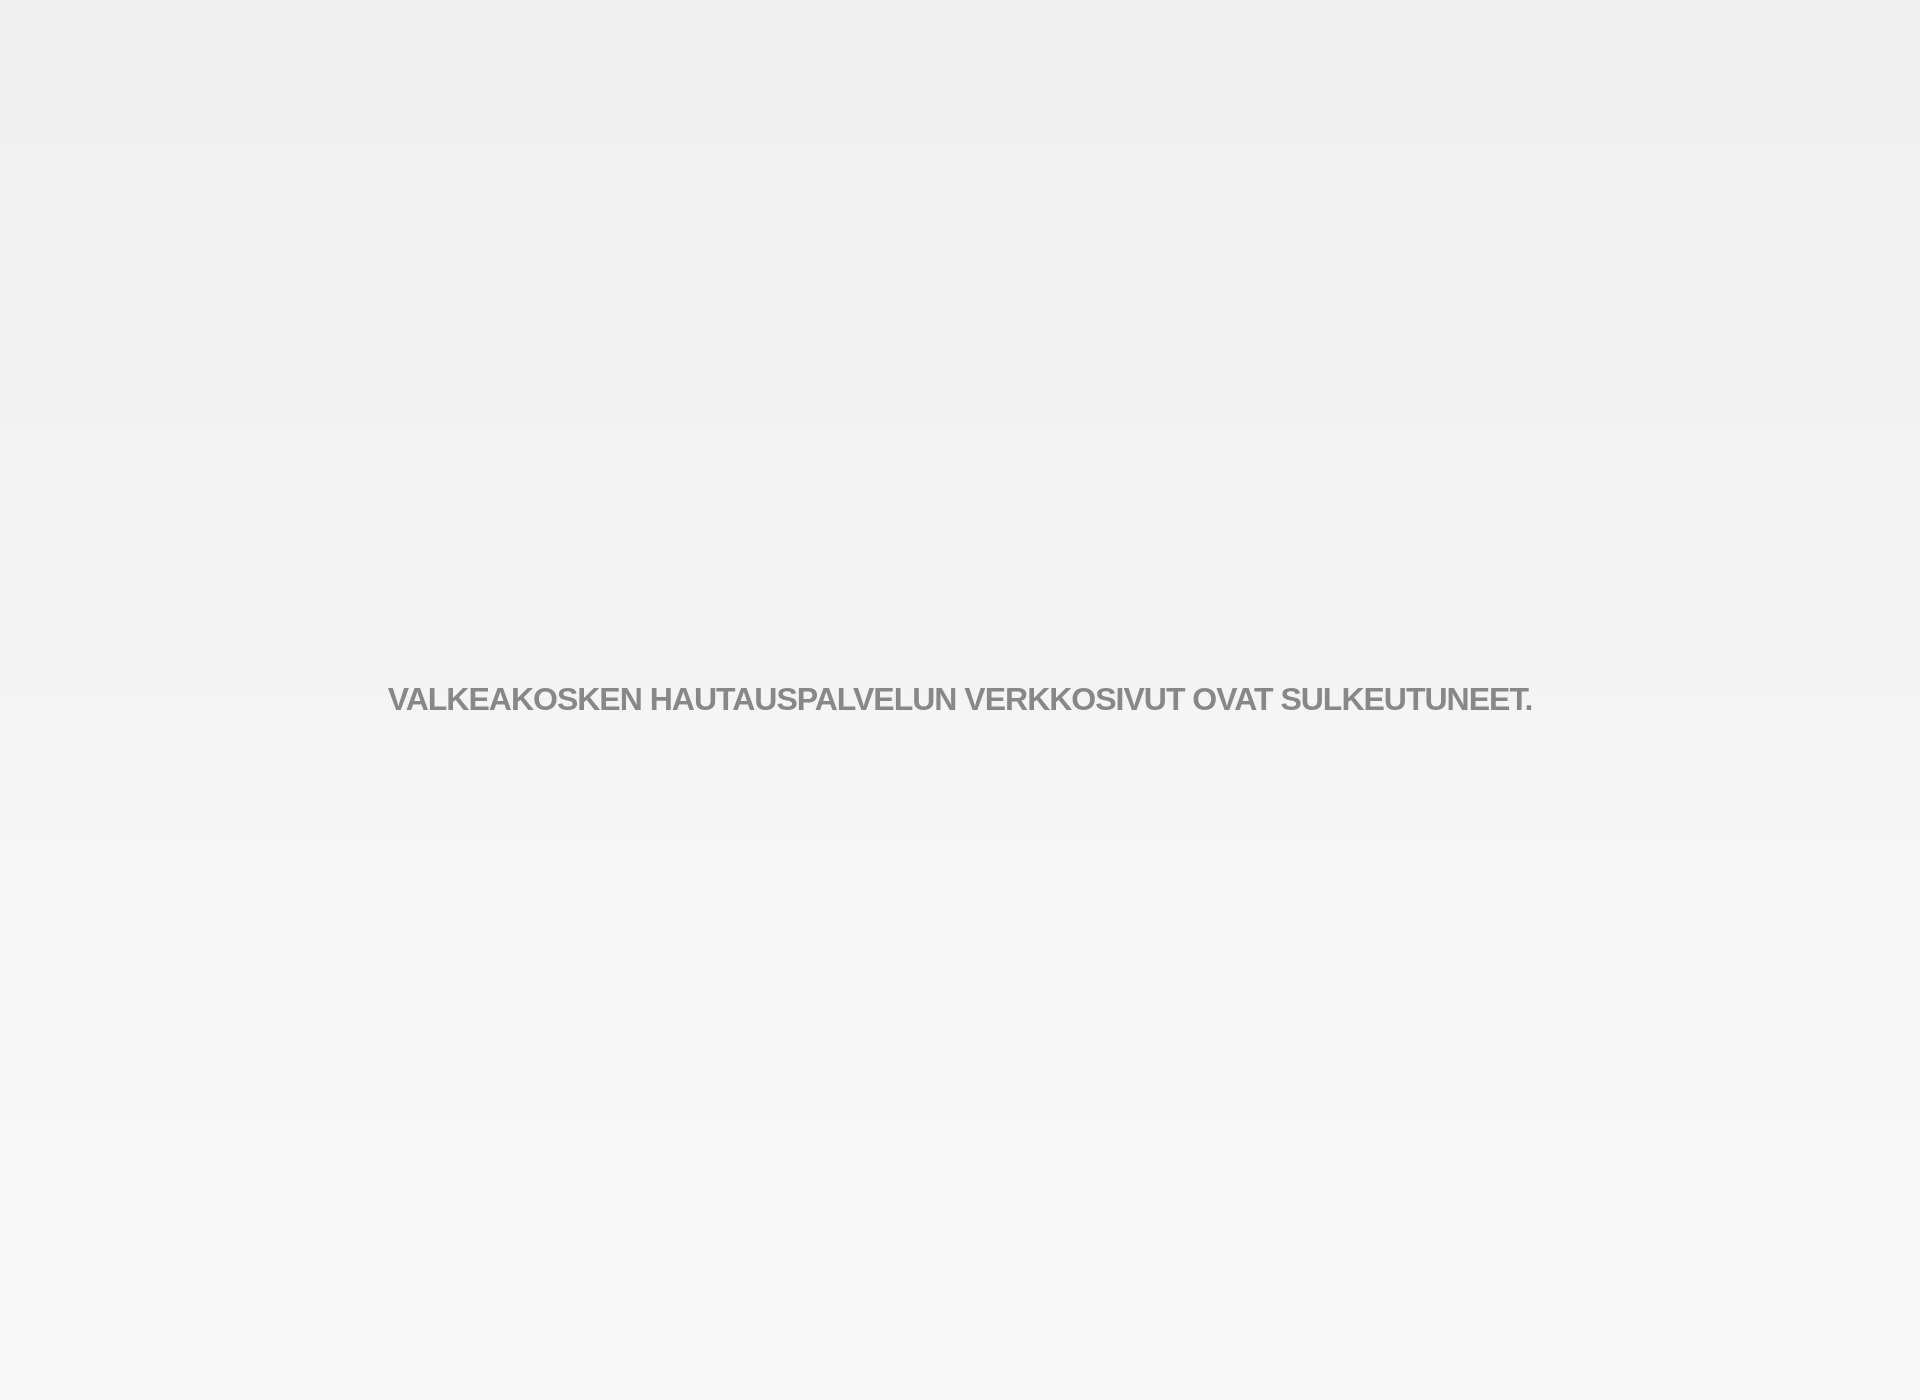 Skärmdump för valkeakoskenhautauspalvelu.fi